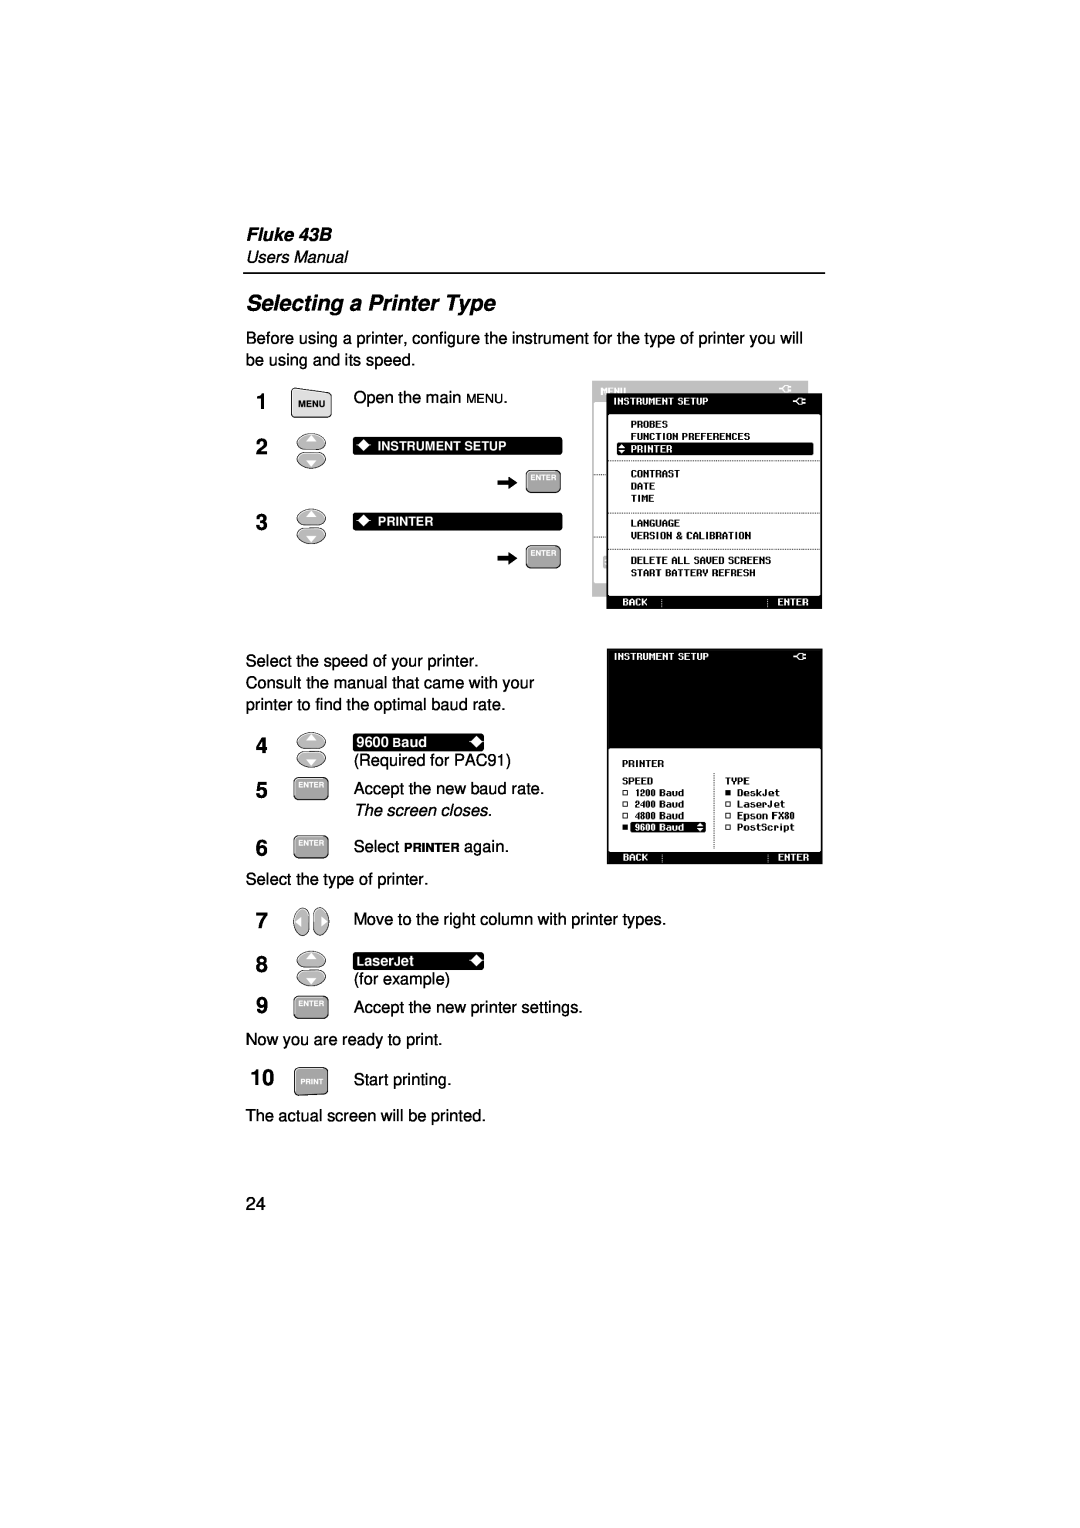 Fluke user manual Selecting a Printer Type, Fluke 43B, Users Manual, Baud, LaserJet 